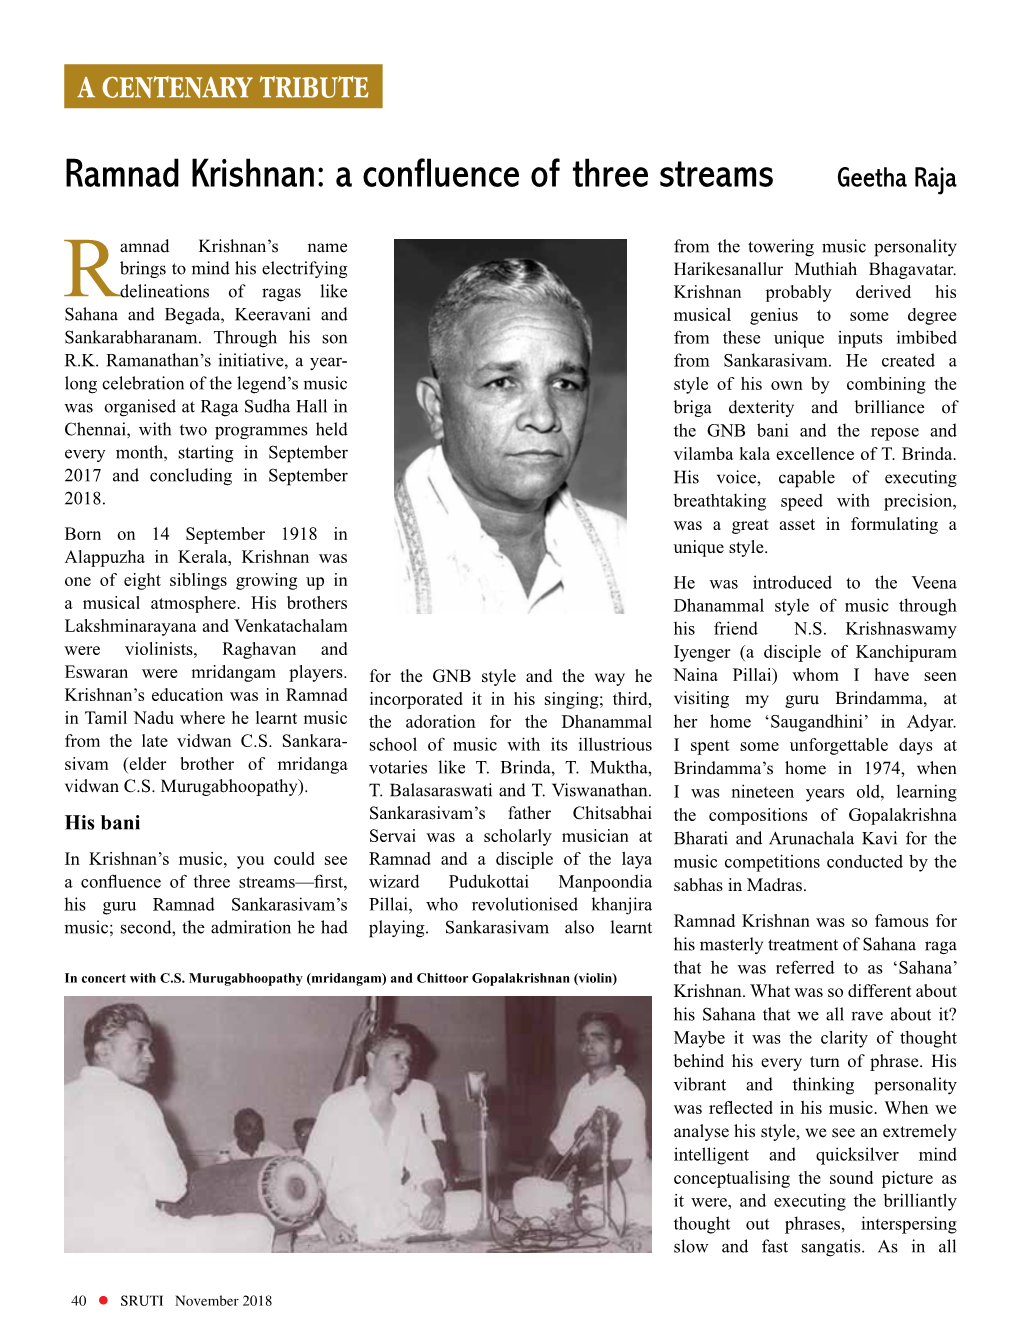 Ramnad Krishnan: a Confluence of Three Streams Geetha Raja